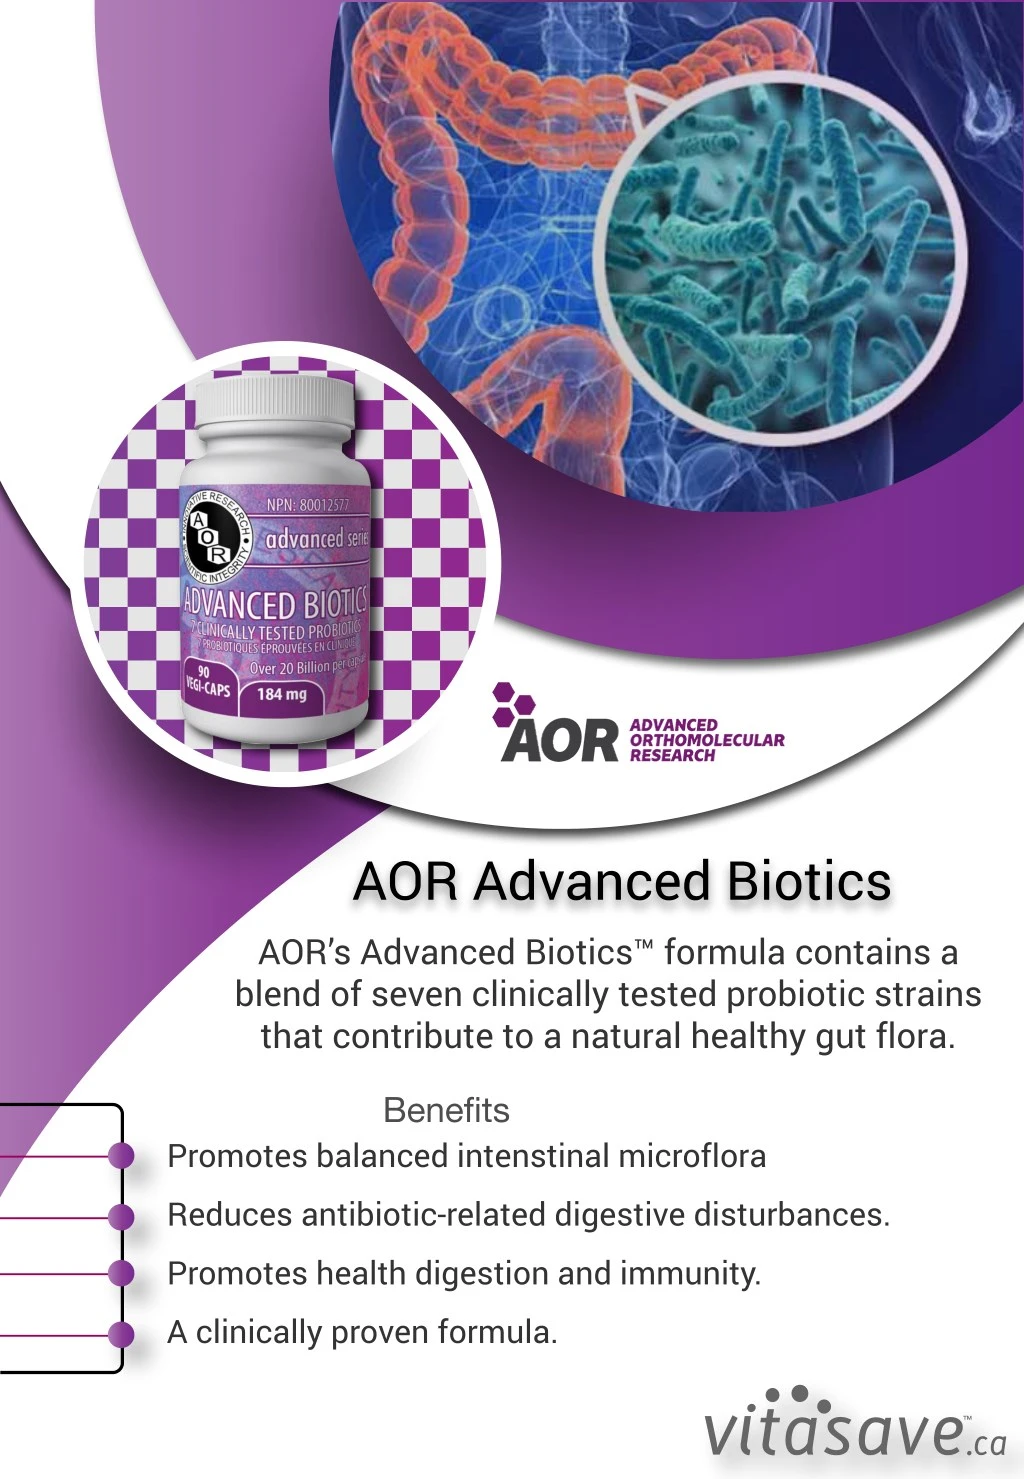 aor s advanced biotics formula contains a blend